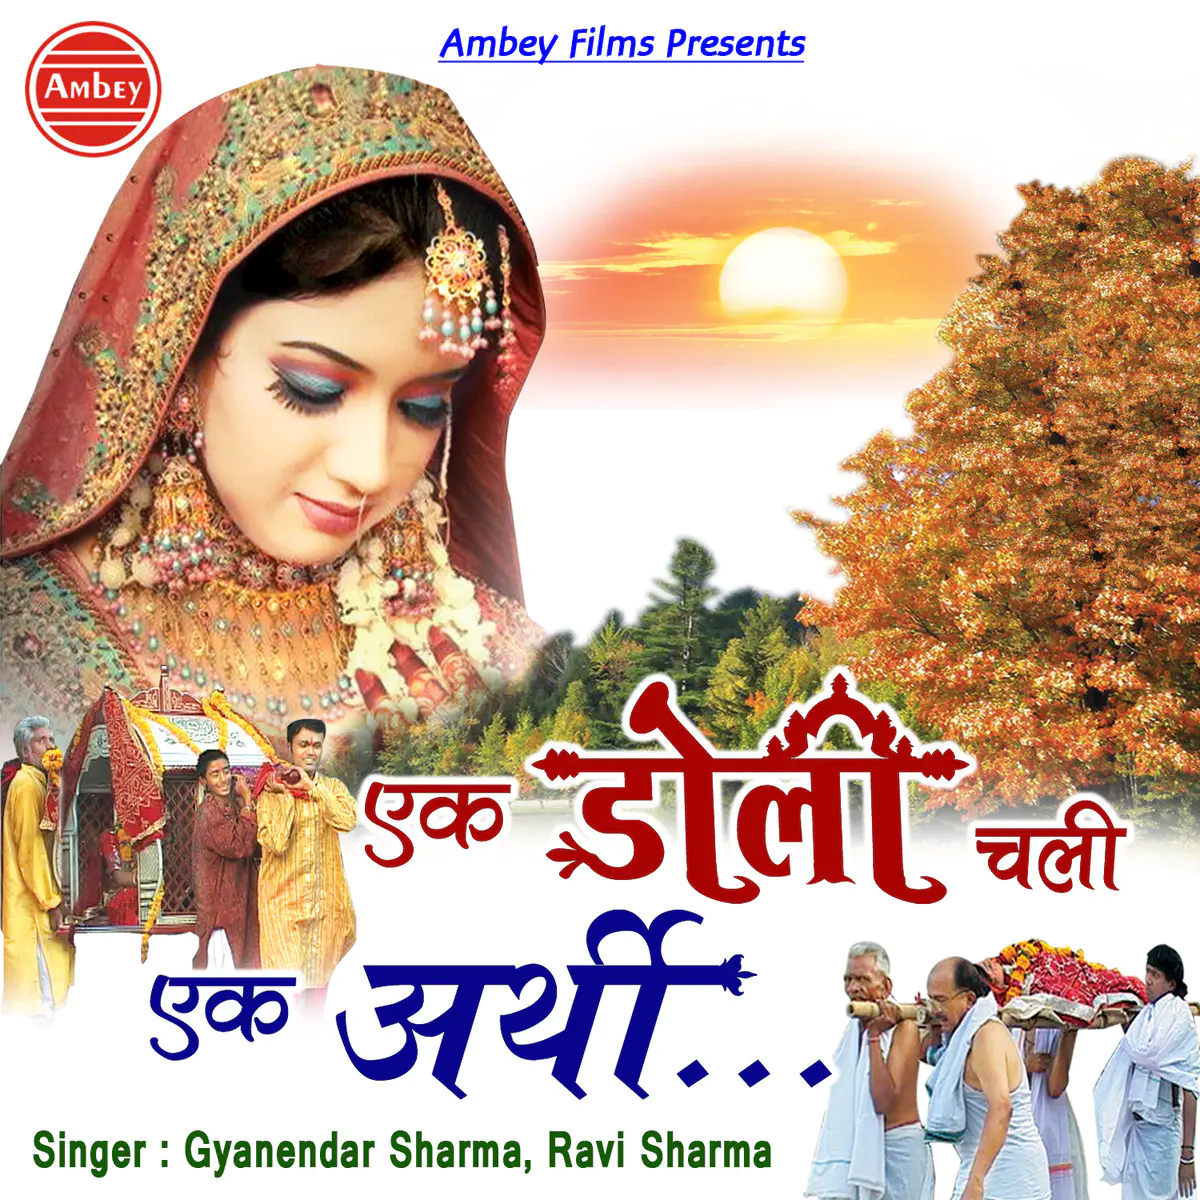 Ek Doli Chali Ek Arthi Songs Download Ek Doli Chali Ek Arthi Mp3 Songs Online Free On Gaana Com Teju rathore & team video: ek doli chali ek arthi mp3 songs